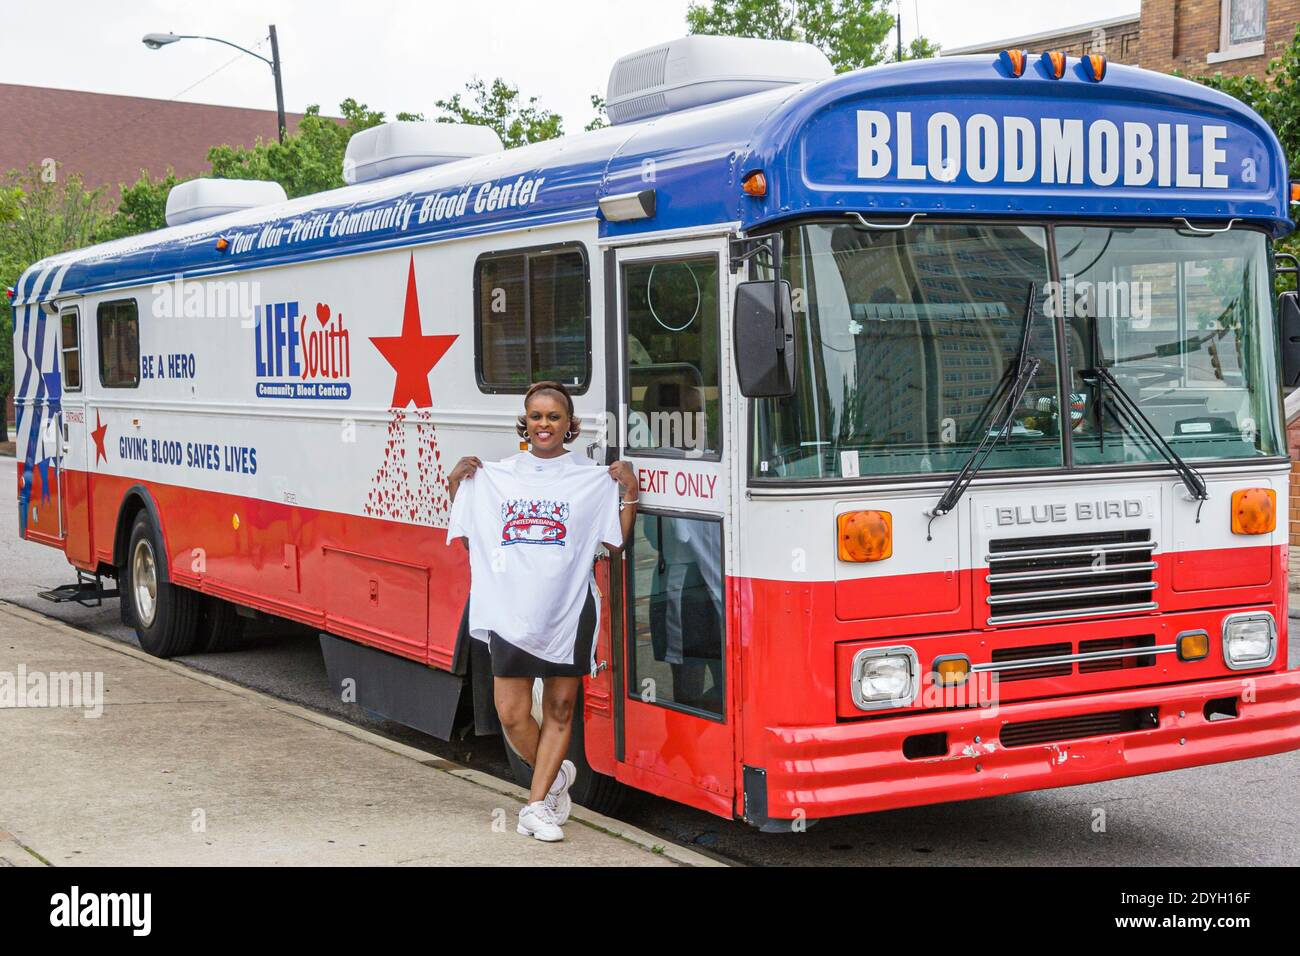 Birmingham Alabama, Bloodmobile donnant du sang femme noire, Banque D'Images